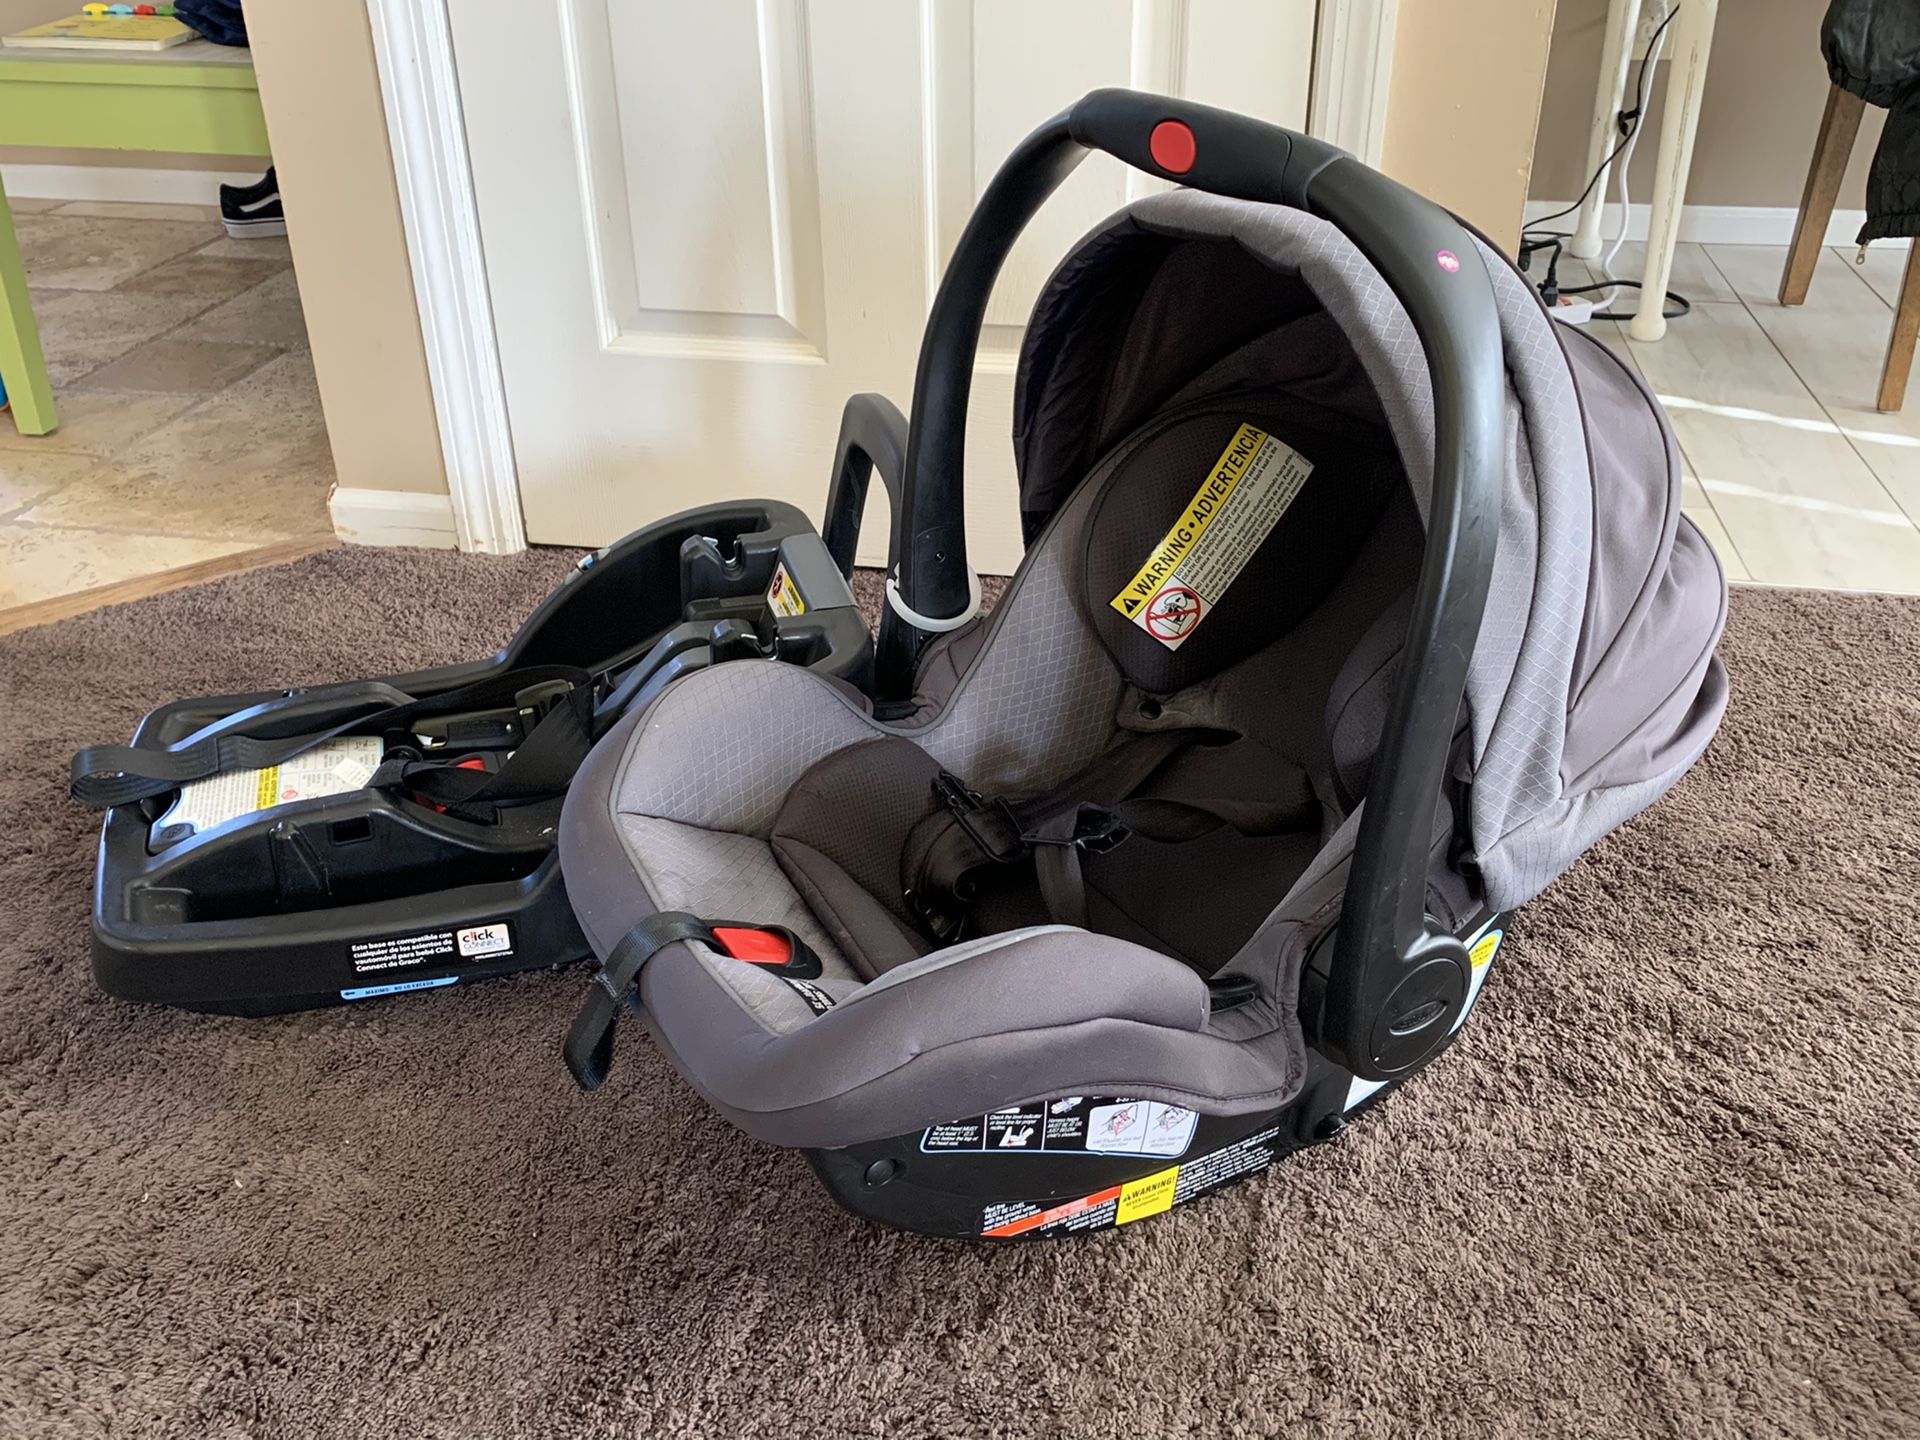 Graco infant car seat plus 2 bases